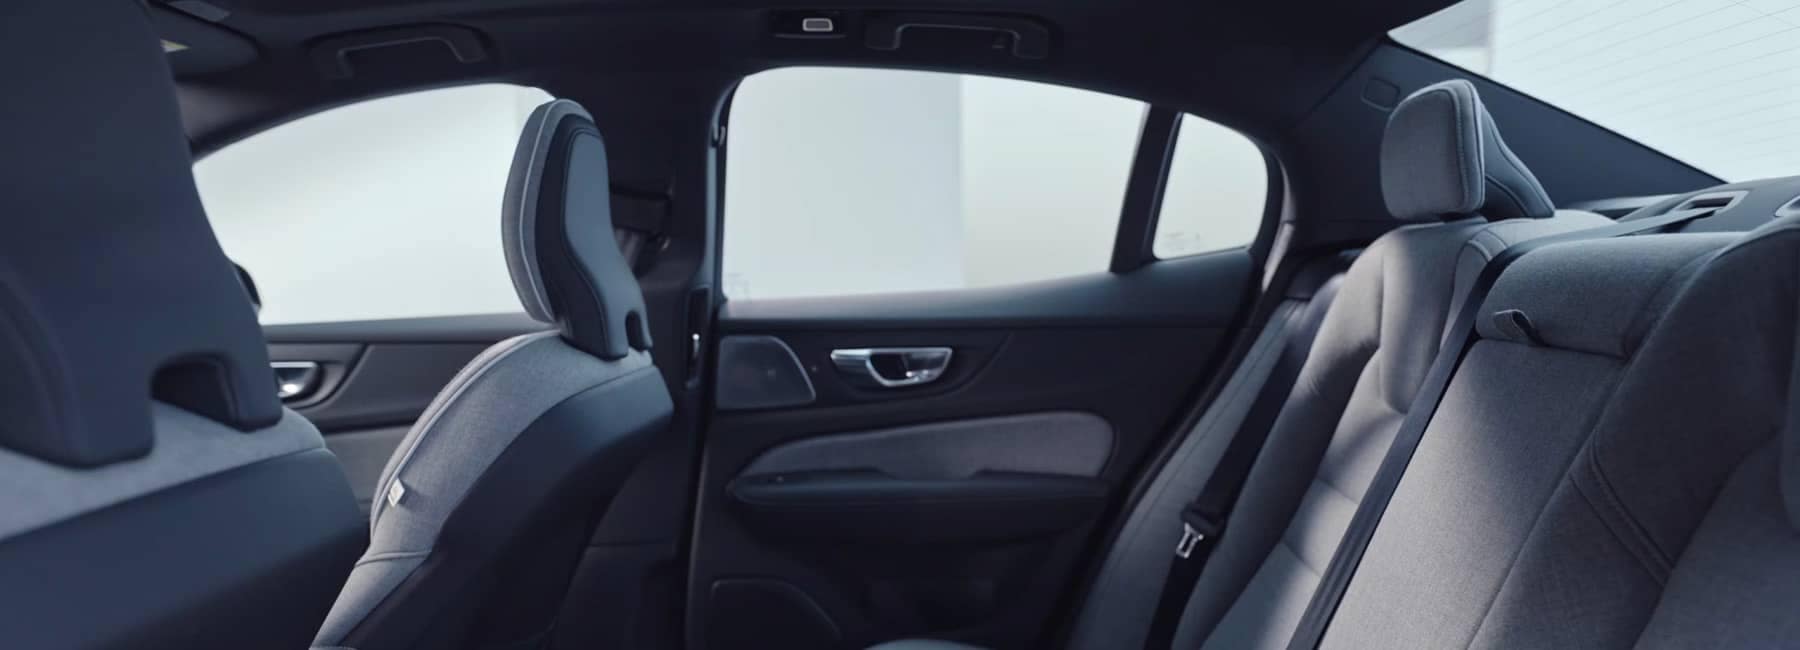 S60 Hybrid Interior back row